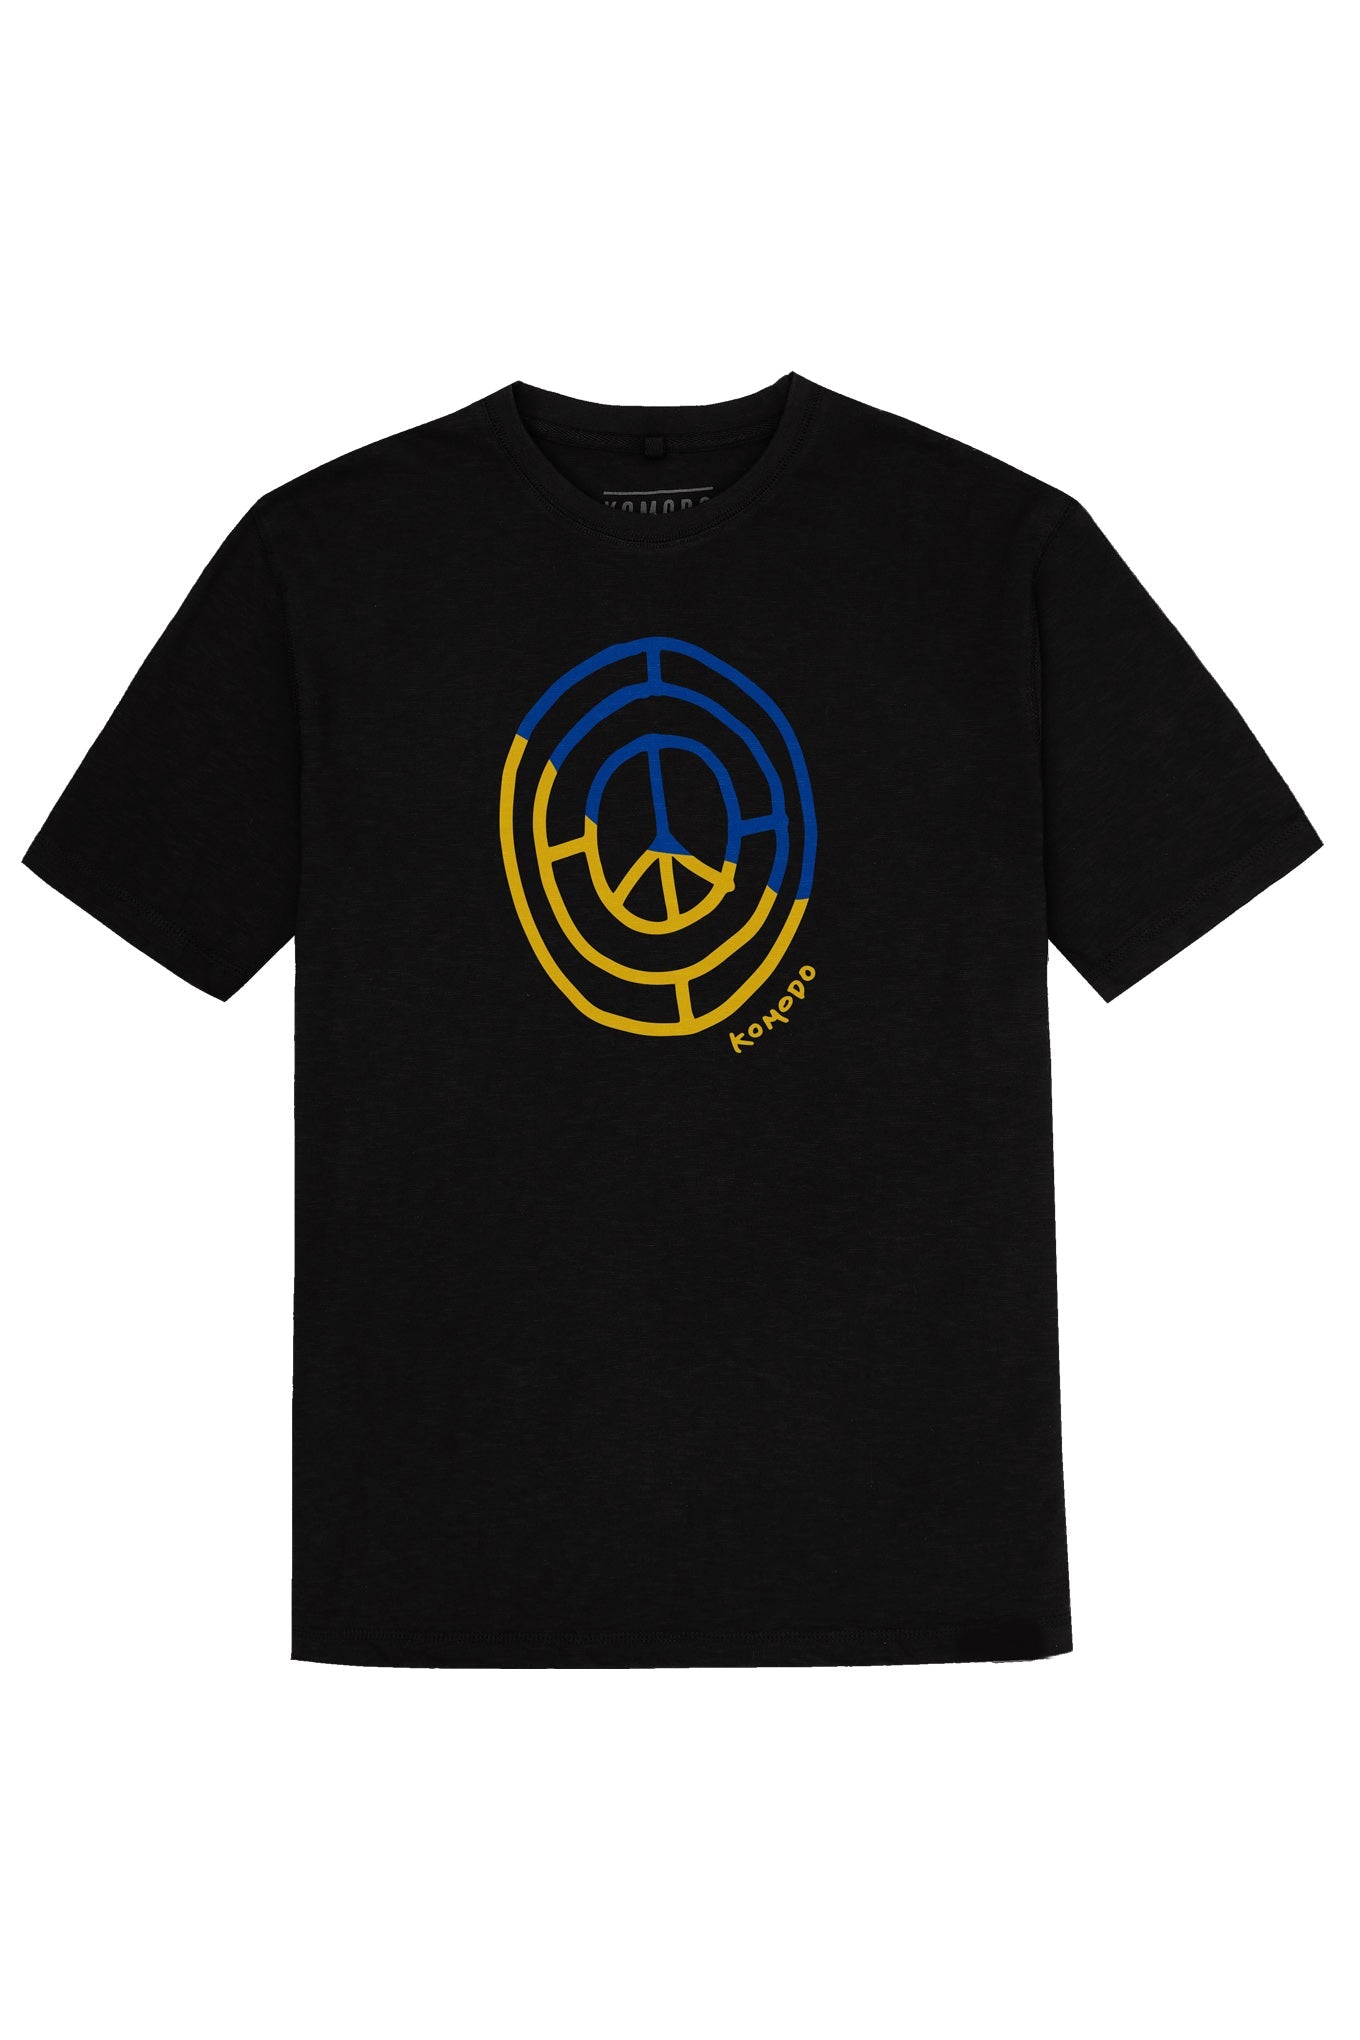 T-shirt - PEACE 4 UKRAINE Organic Cotton Mens Tee - Black